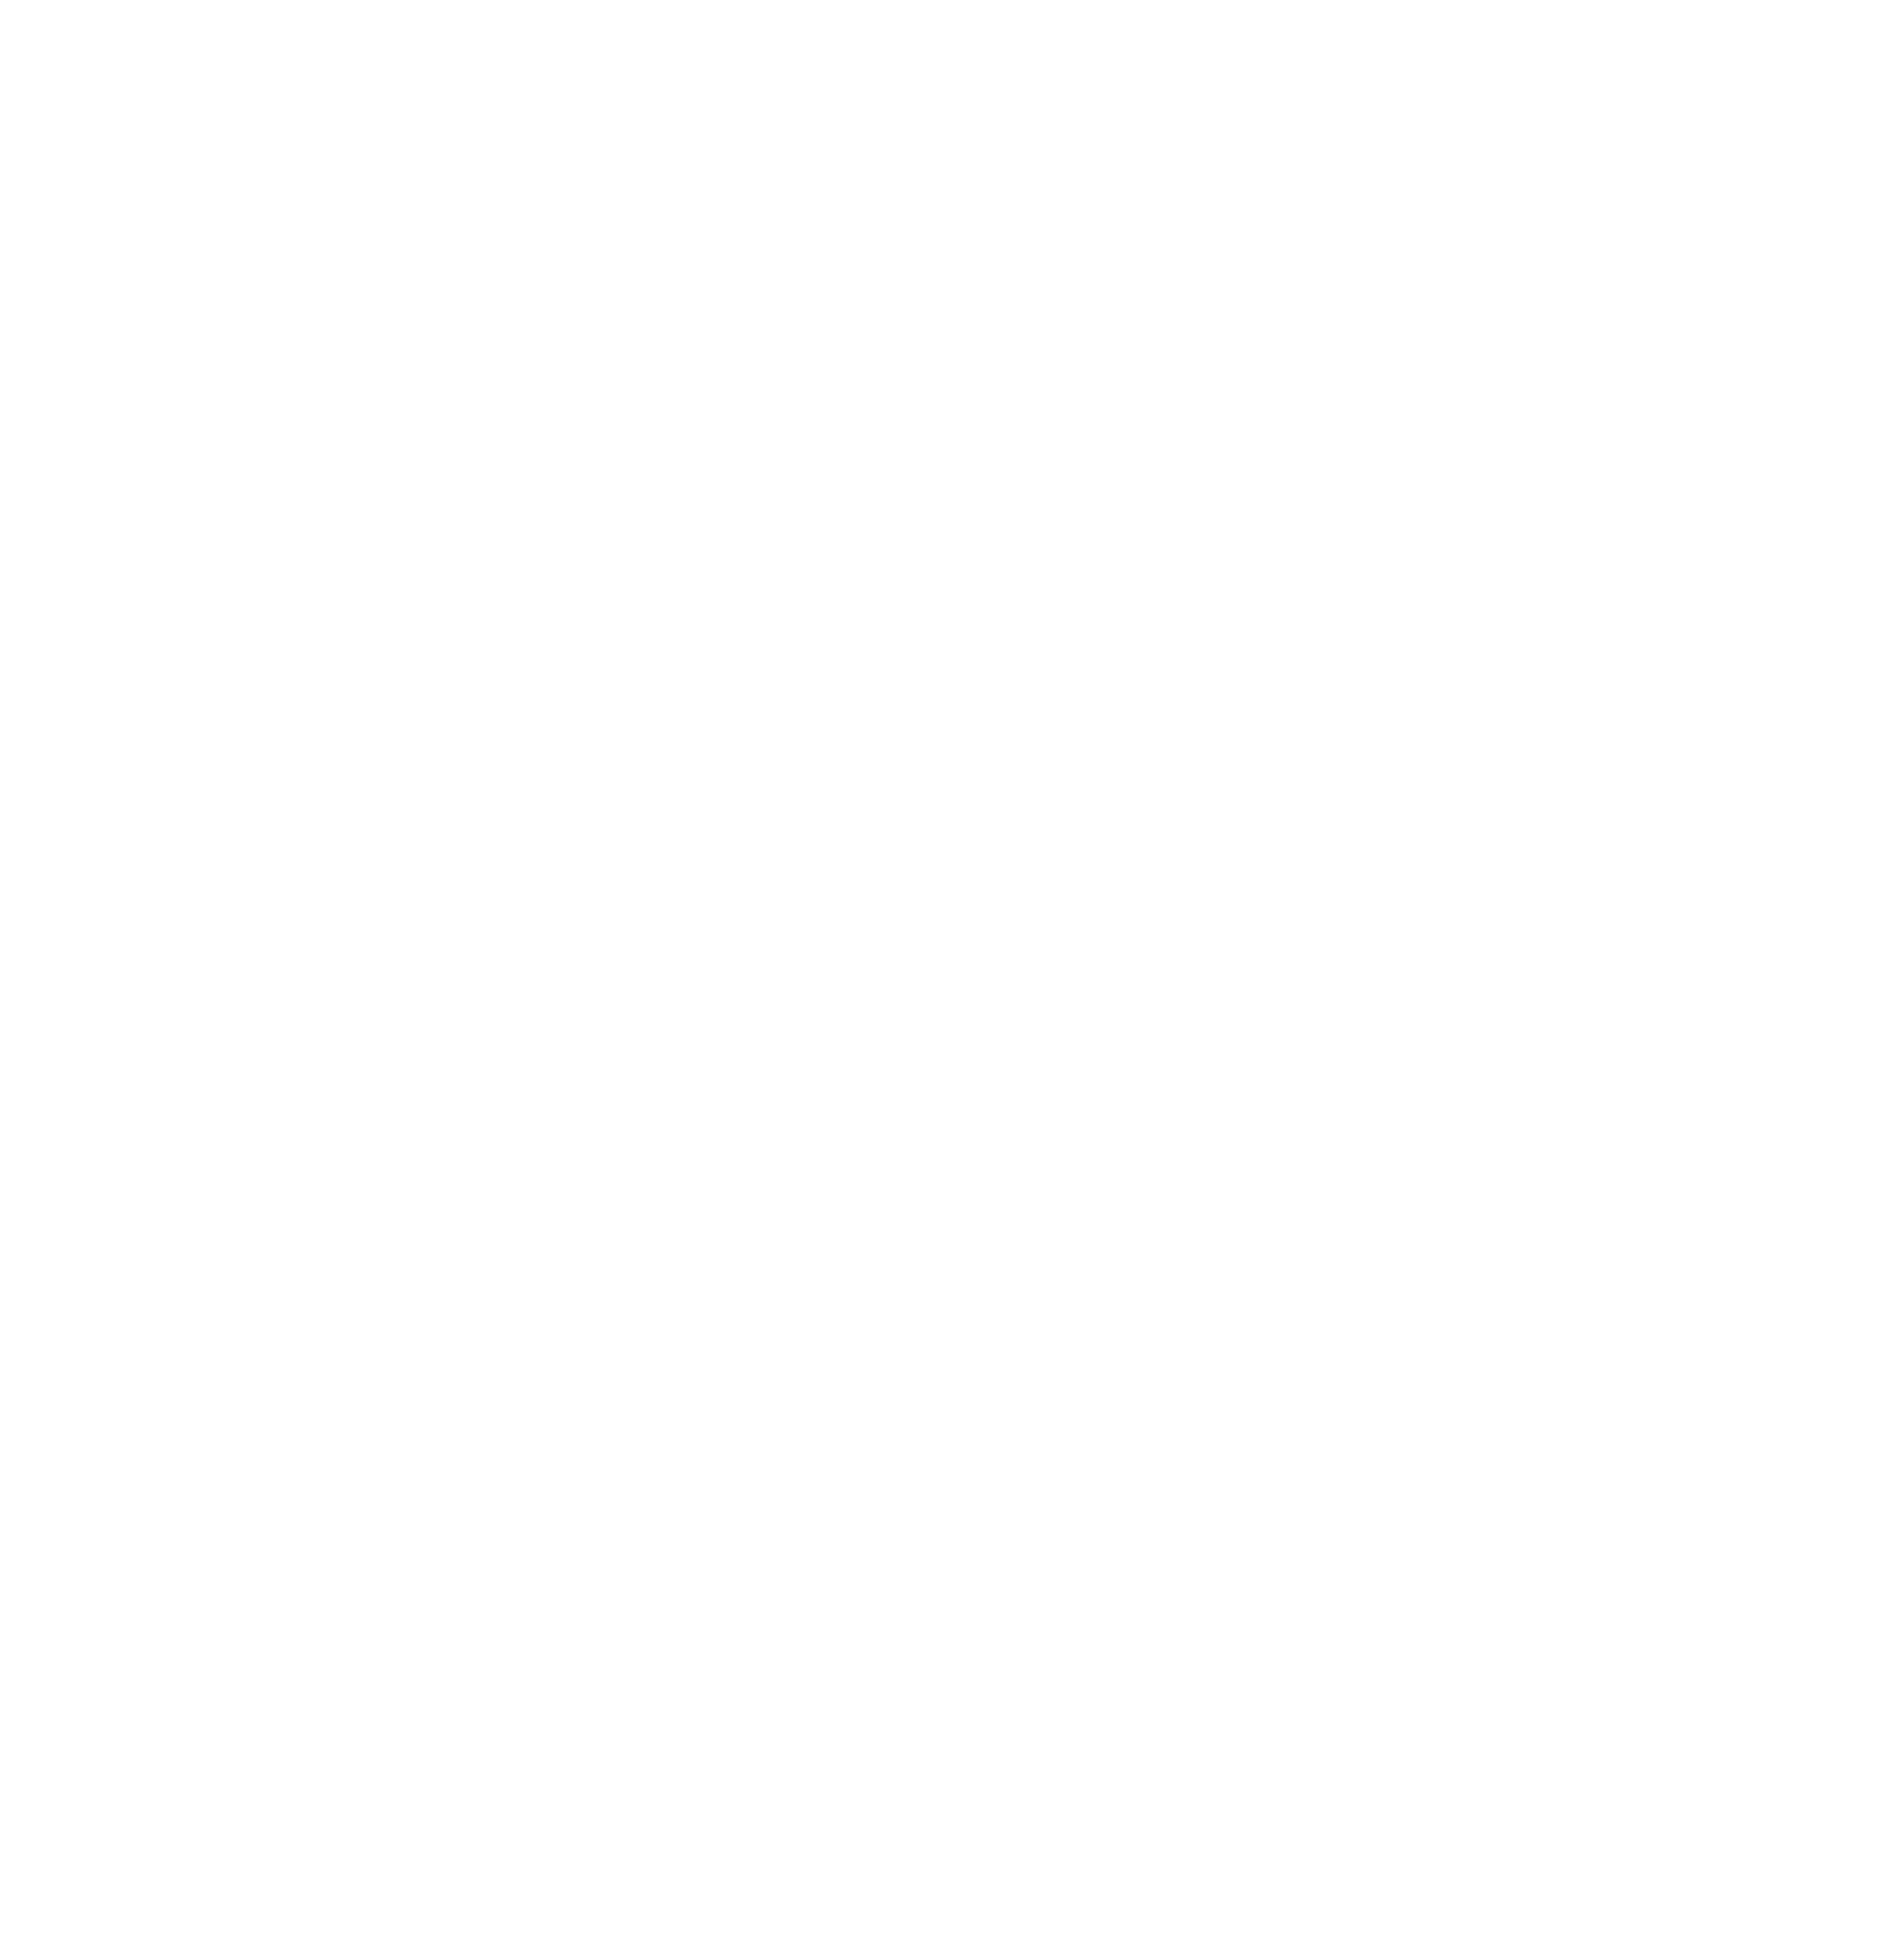 GAAD logo in white